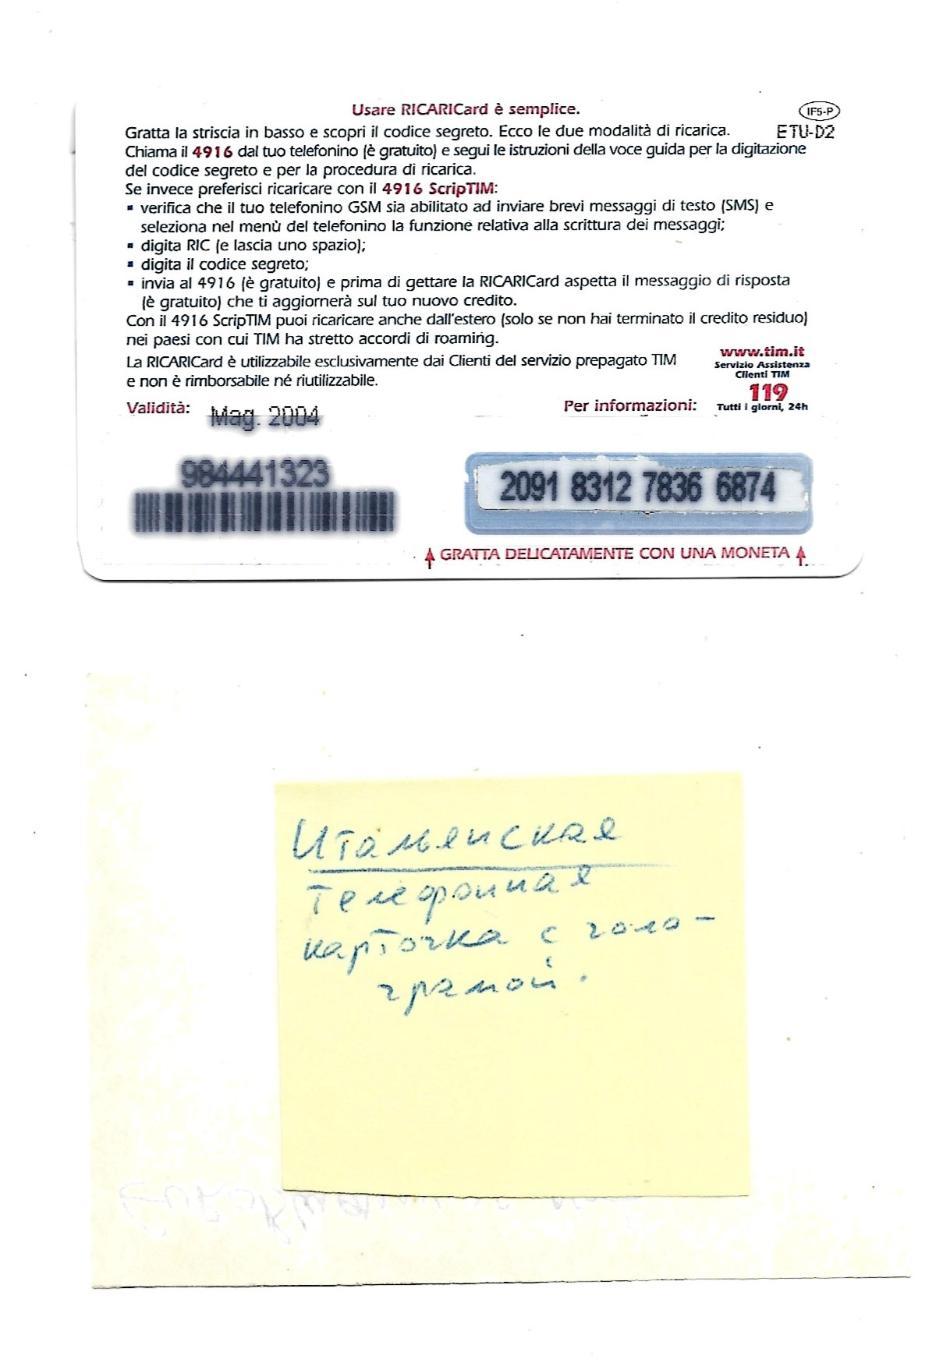 RICARICARD._5_ТЕЛЕФОННАЯ КАРТОЧКА._tim_2000 (ITALY)_ с_галограммой 1